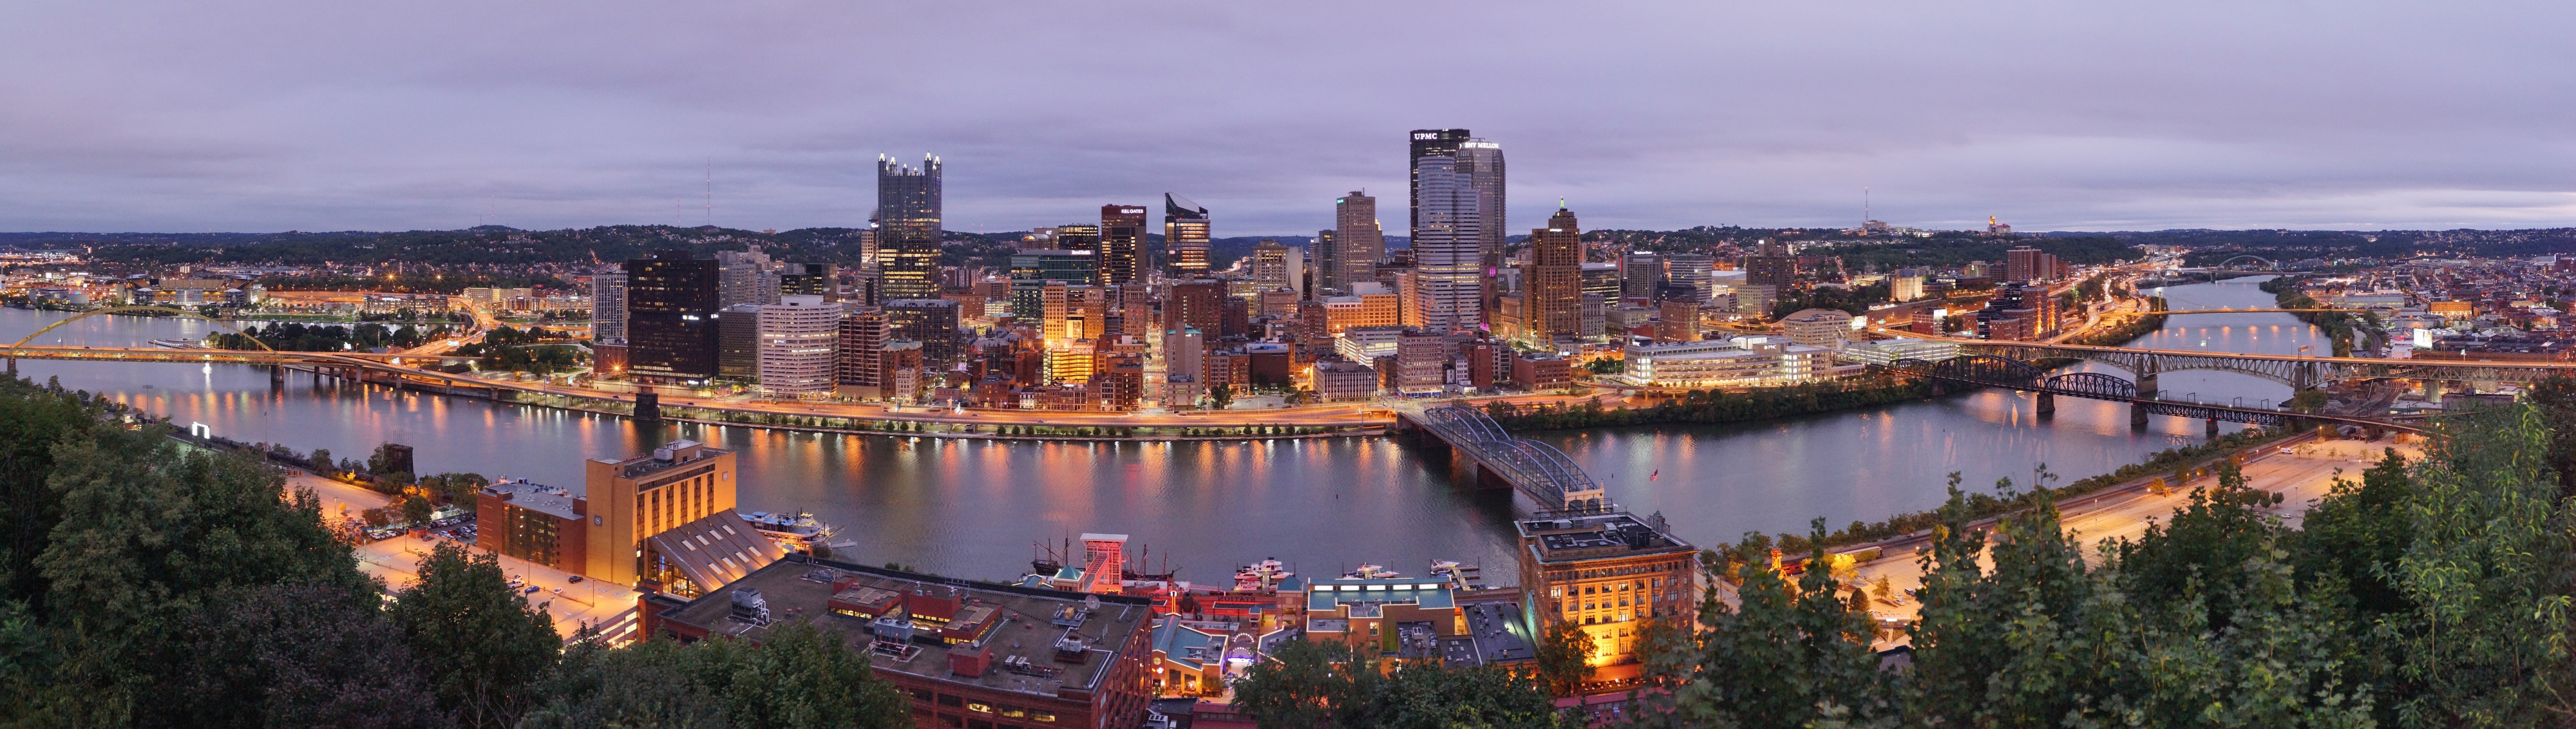 Pittsburgh dawn city pano 2015